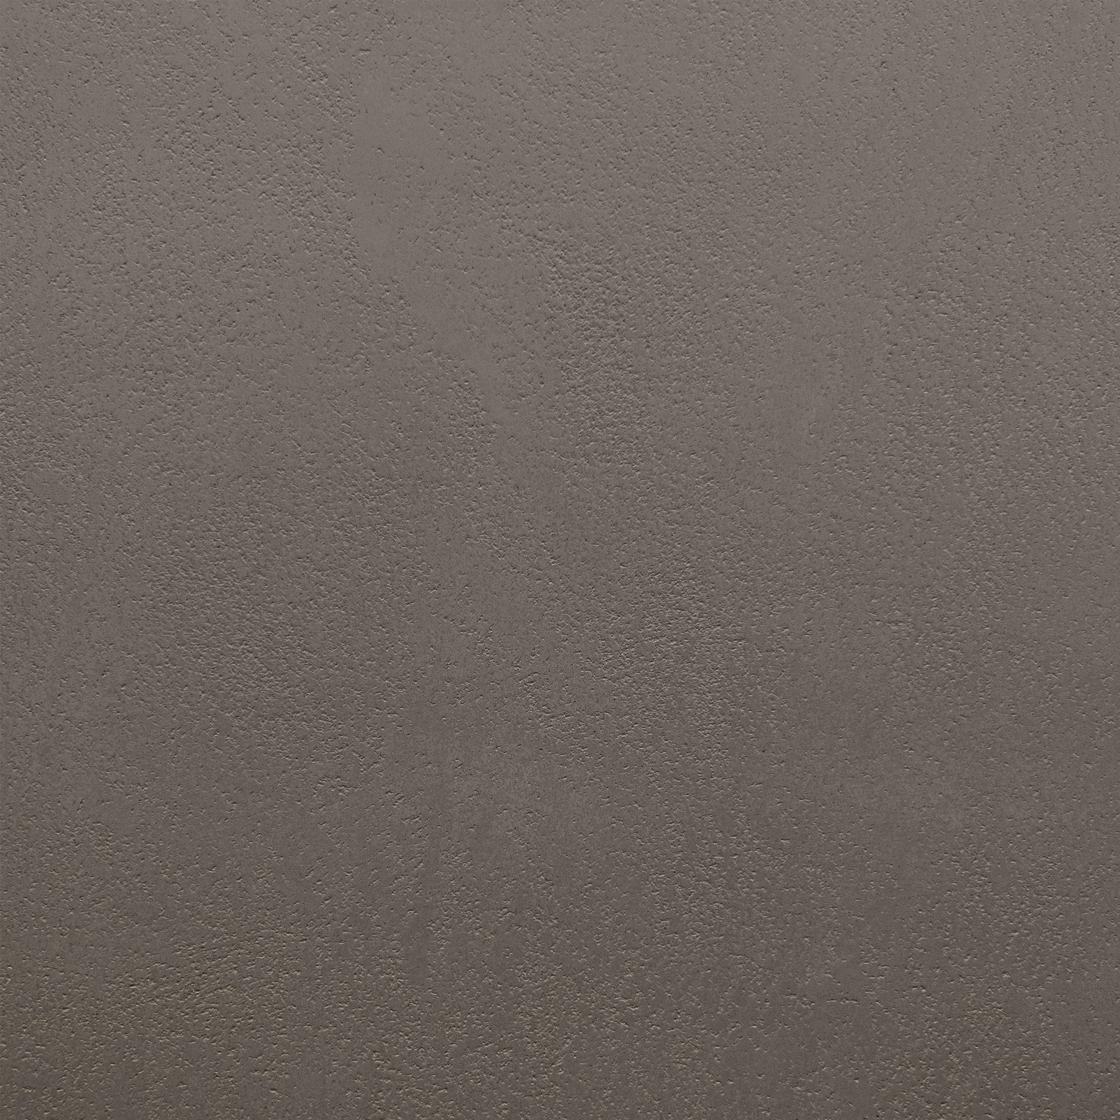 Close up of Armourcoat leatherstone exterior polished plaster finish - 38